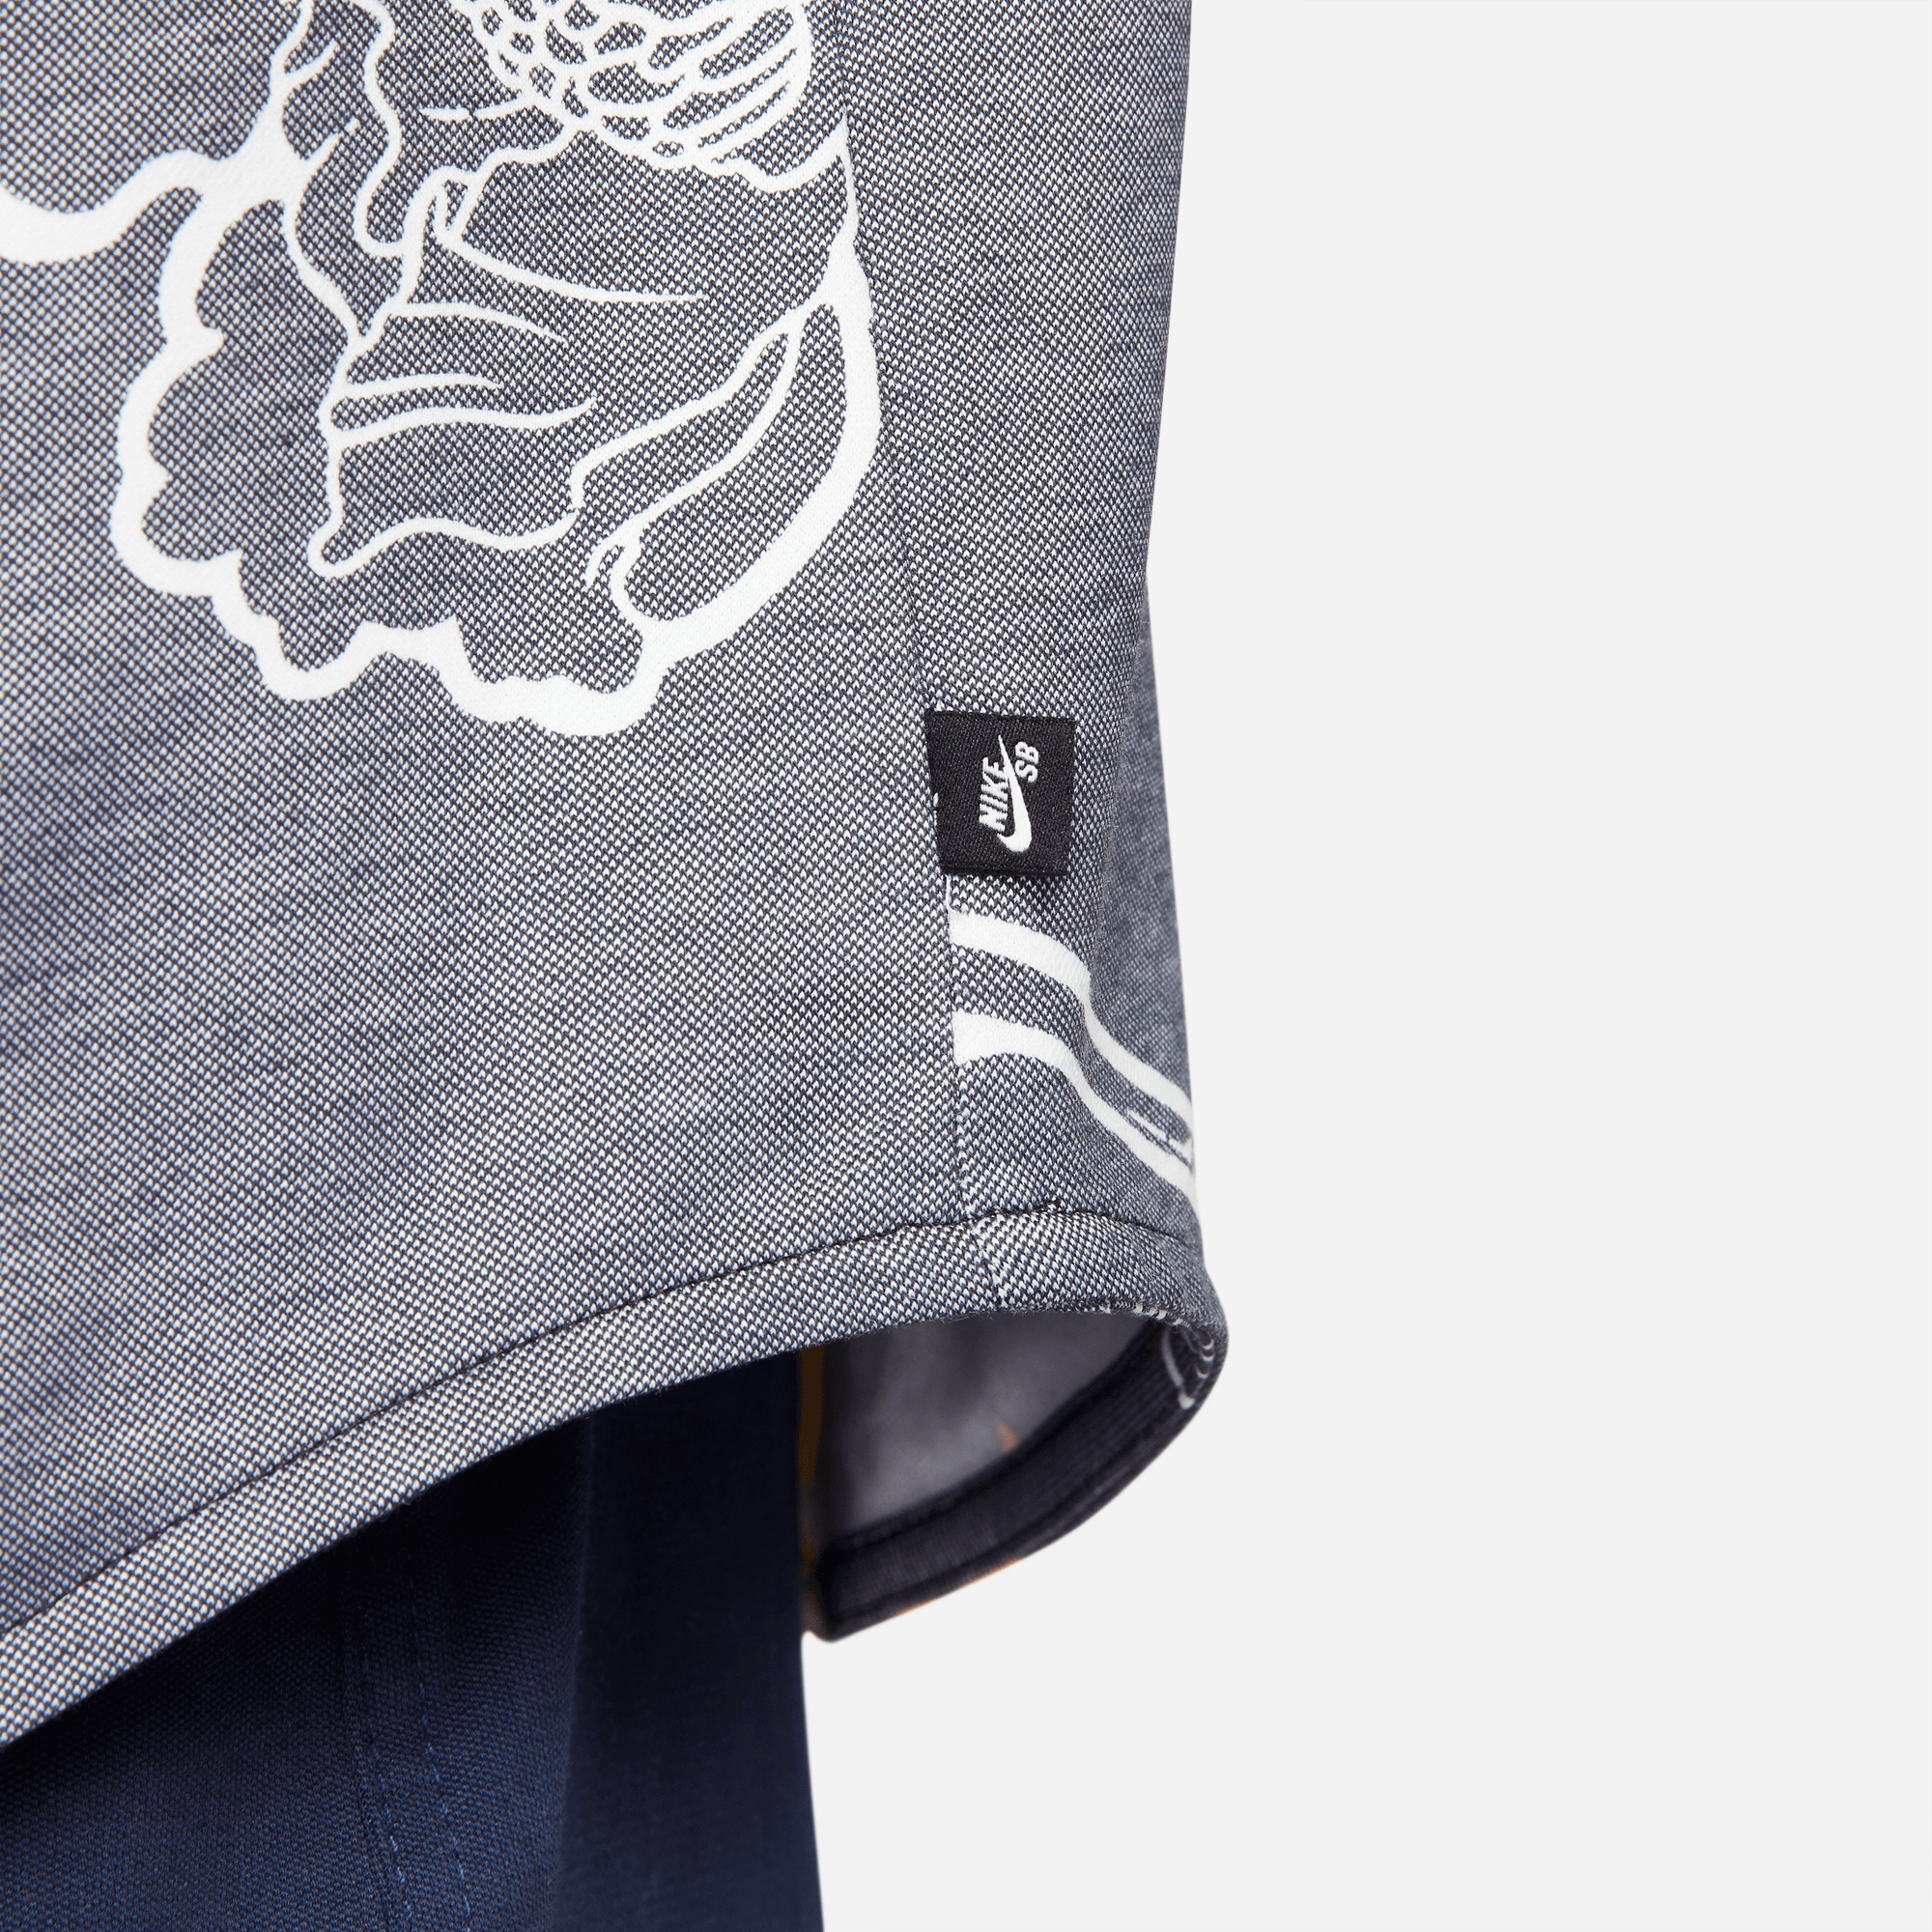 Nike SB Printed Knit Shirt Black Floral